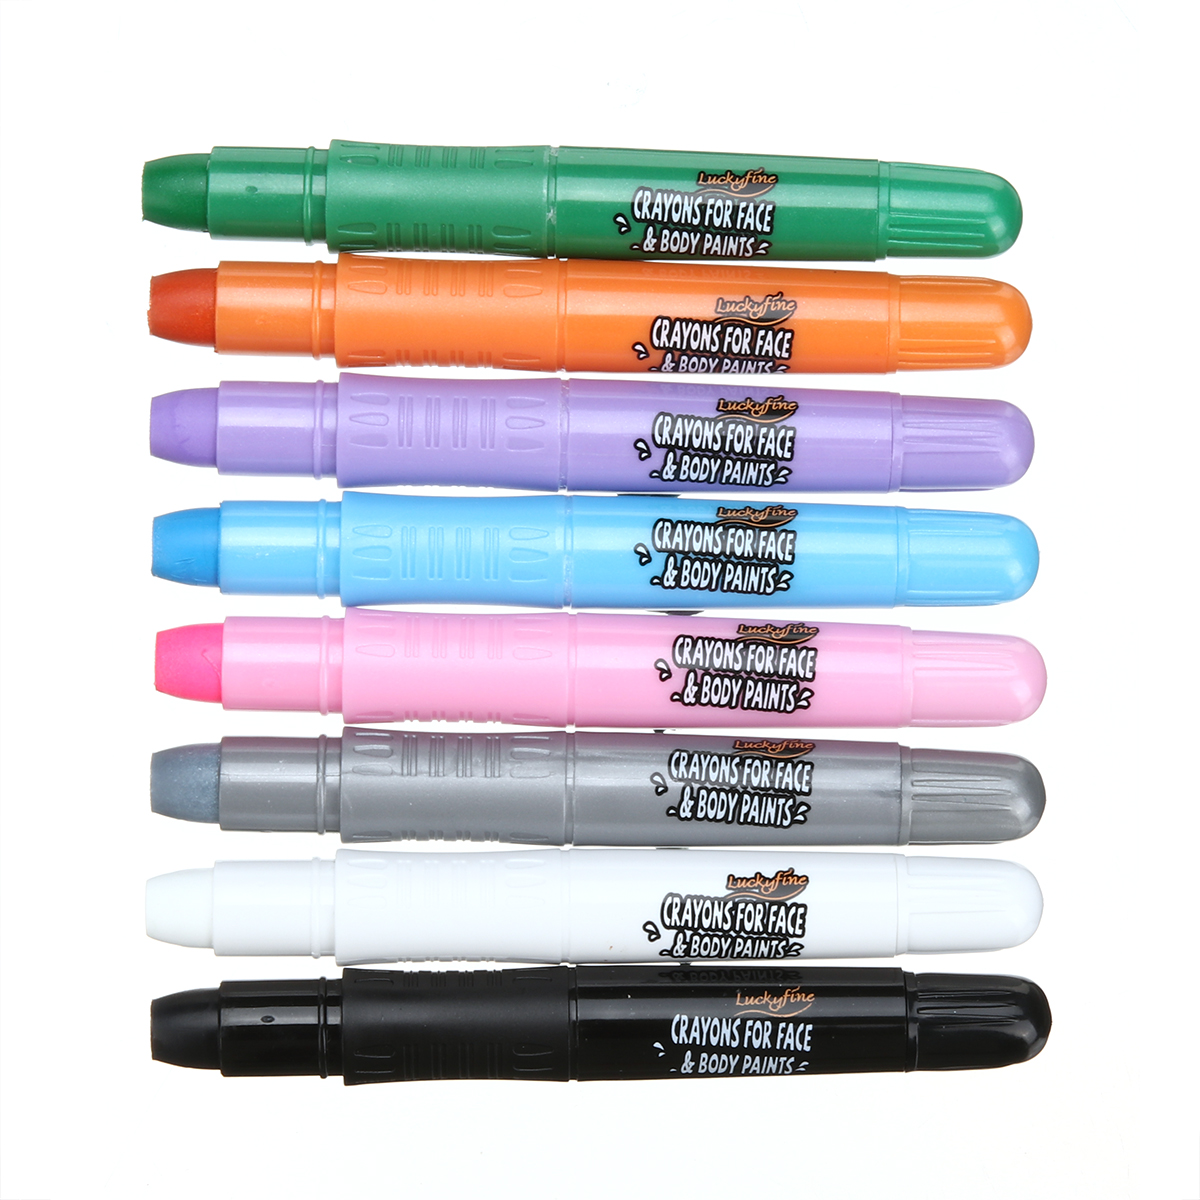 Painting Face Kit Crayons, Muscccm 16 Colors Non-Toxic Makeup Face Paint  Sticks